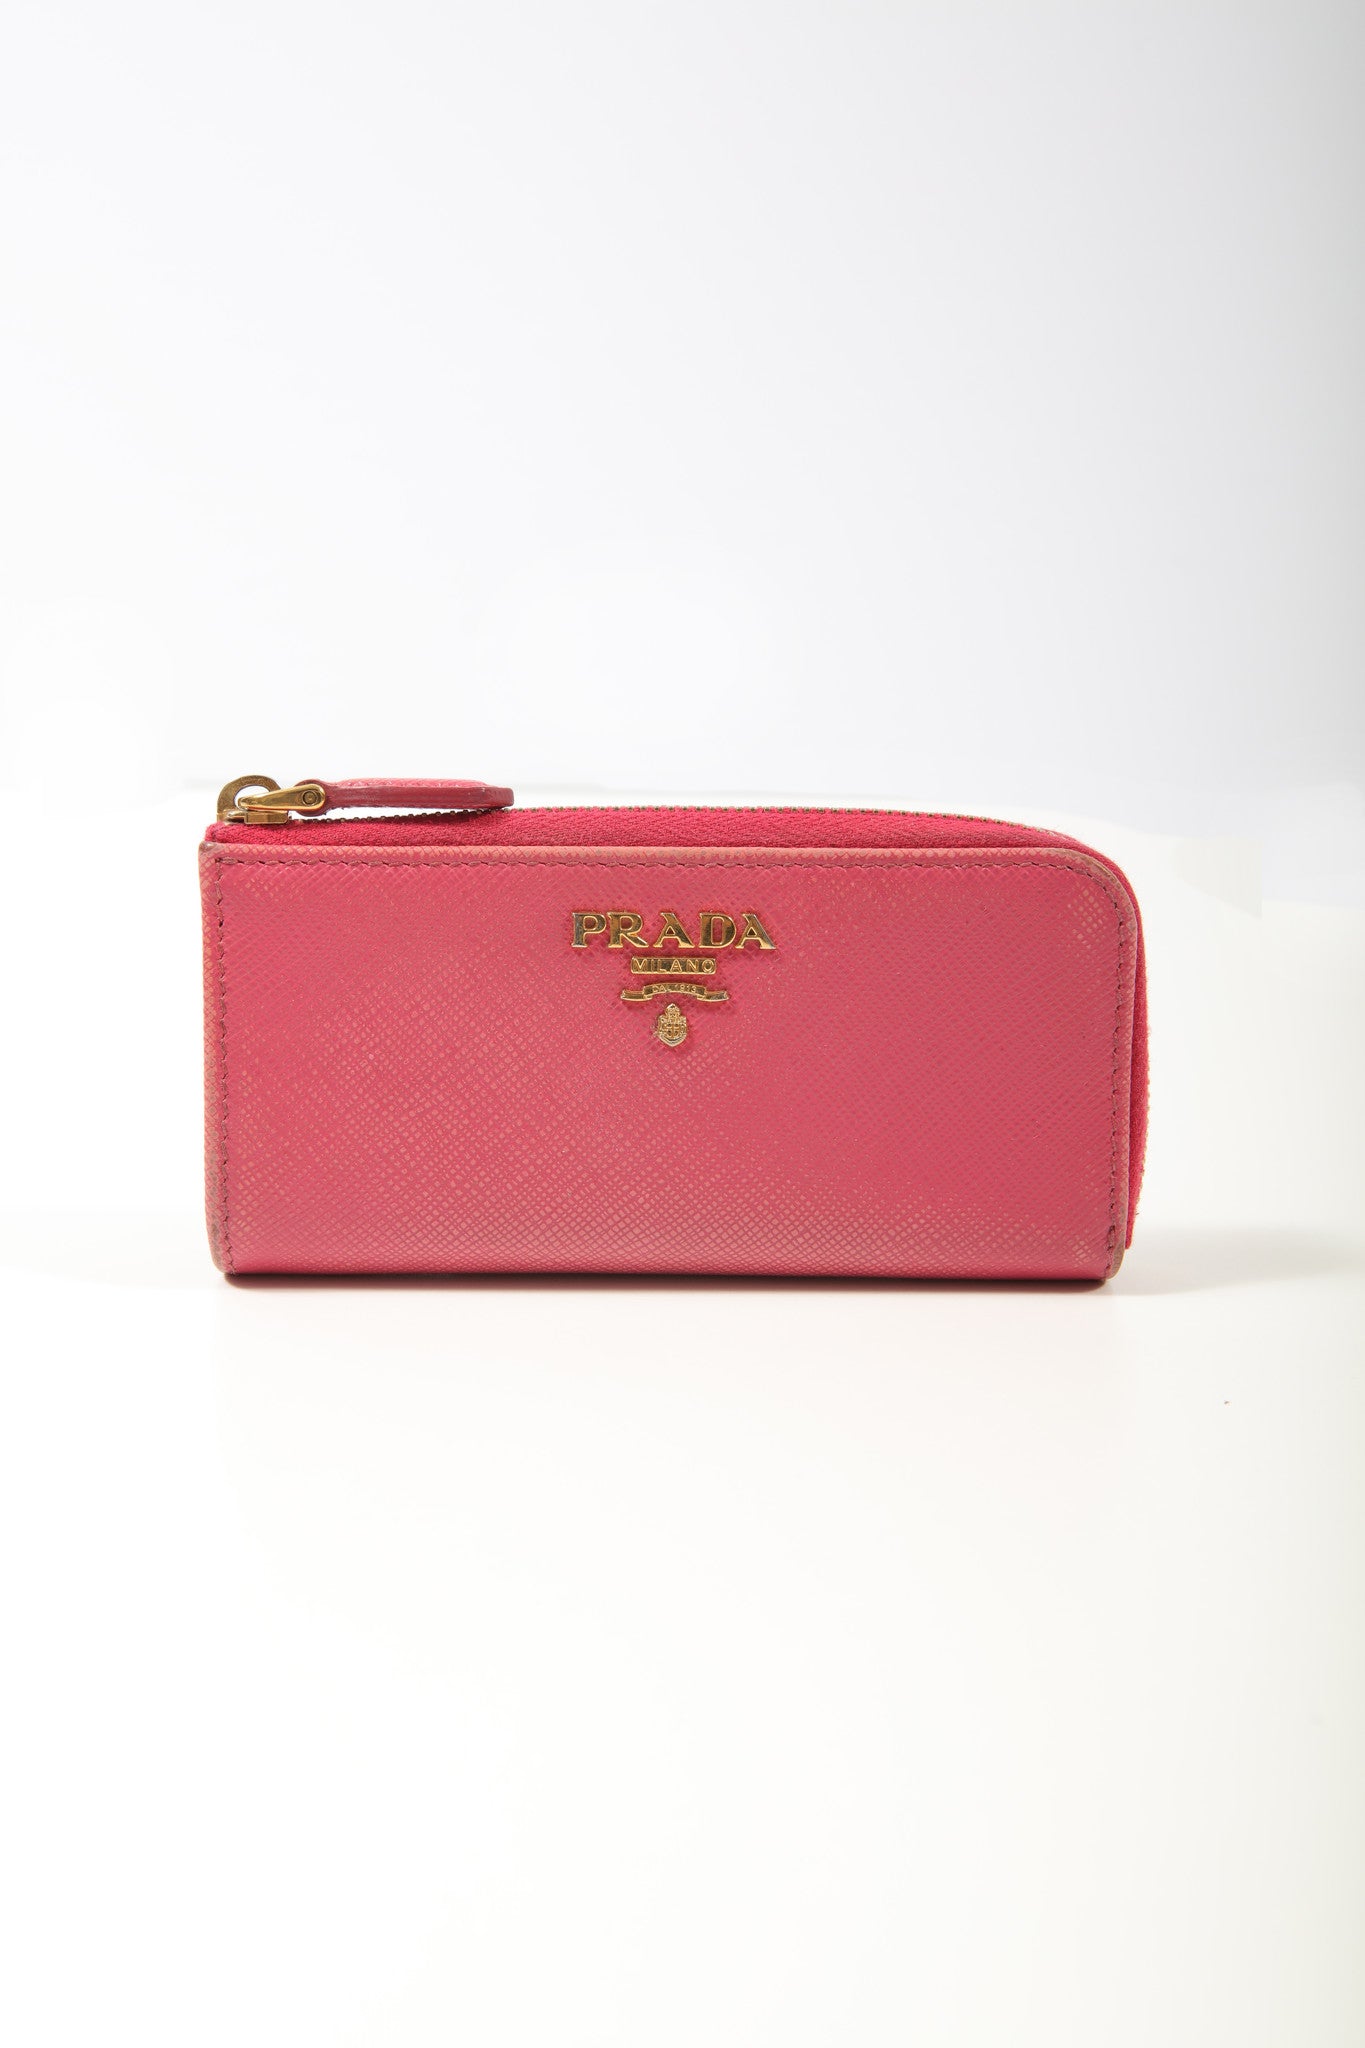 Prada Peonia Pink Saffiano Leather Pouch Key Chain